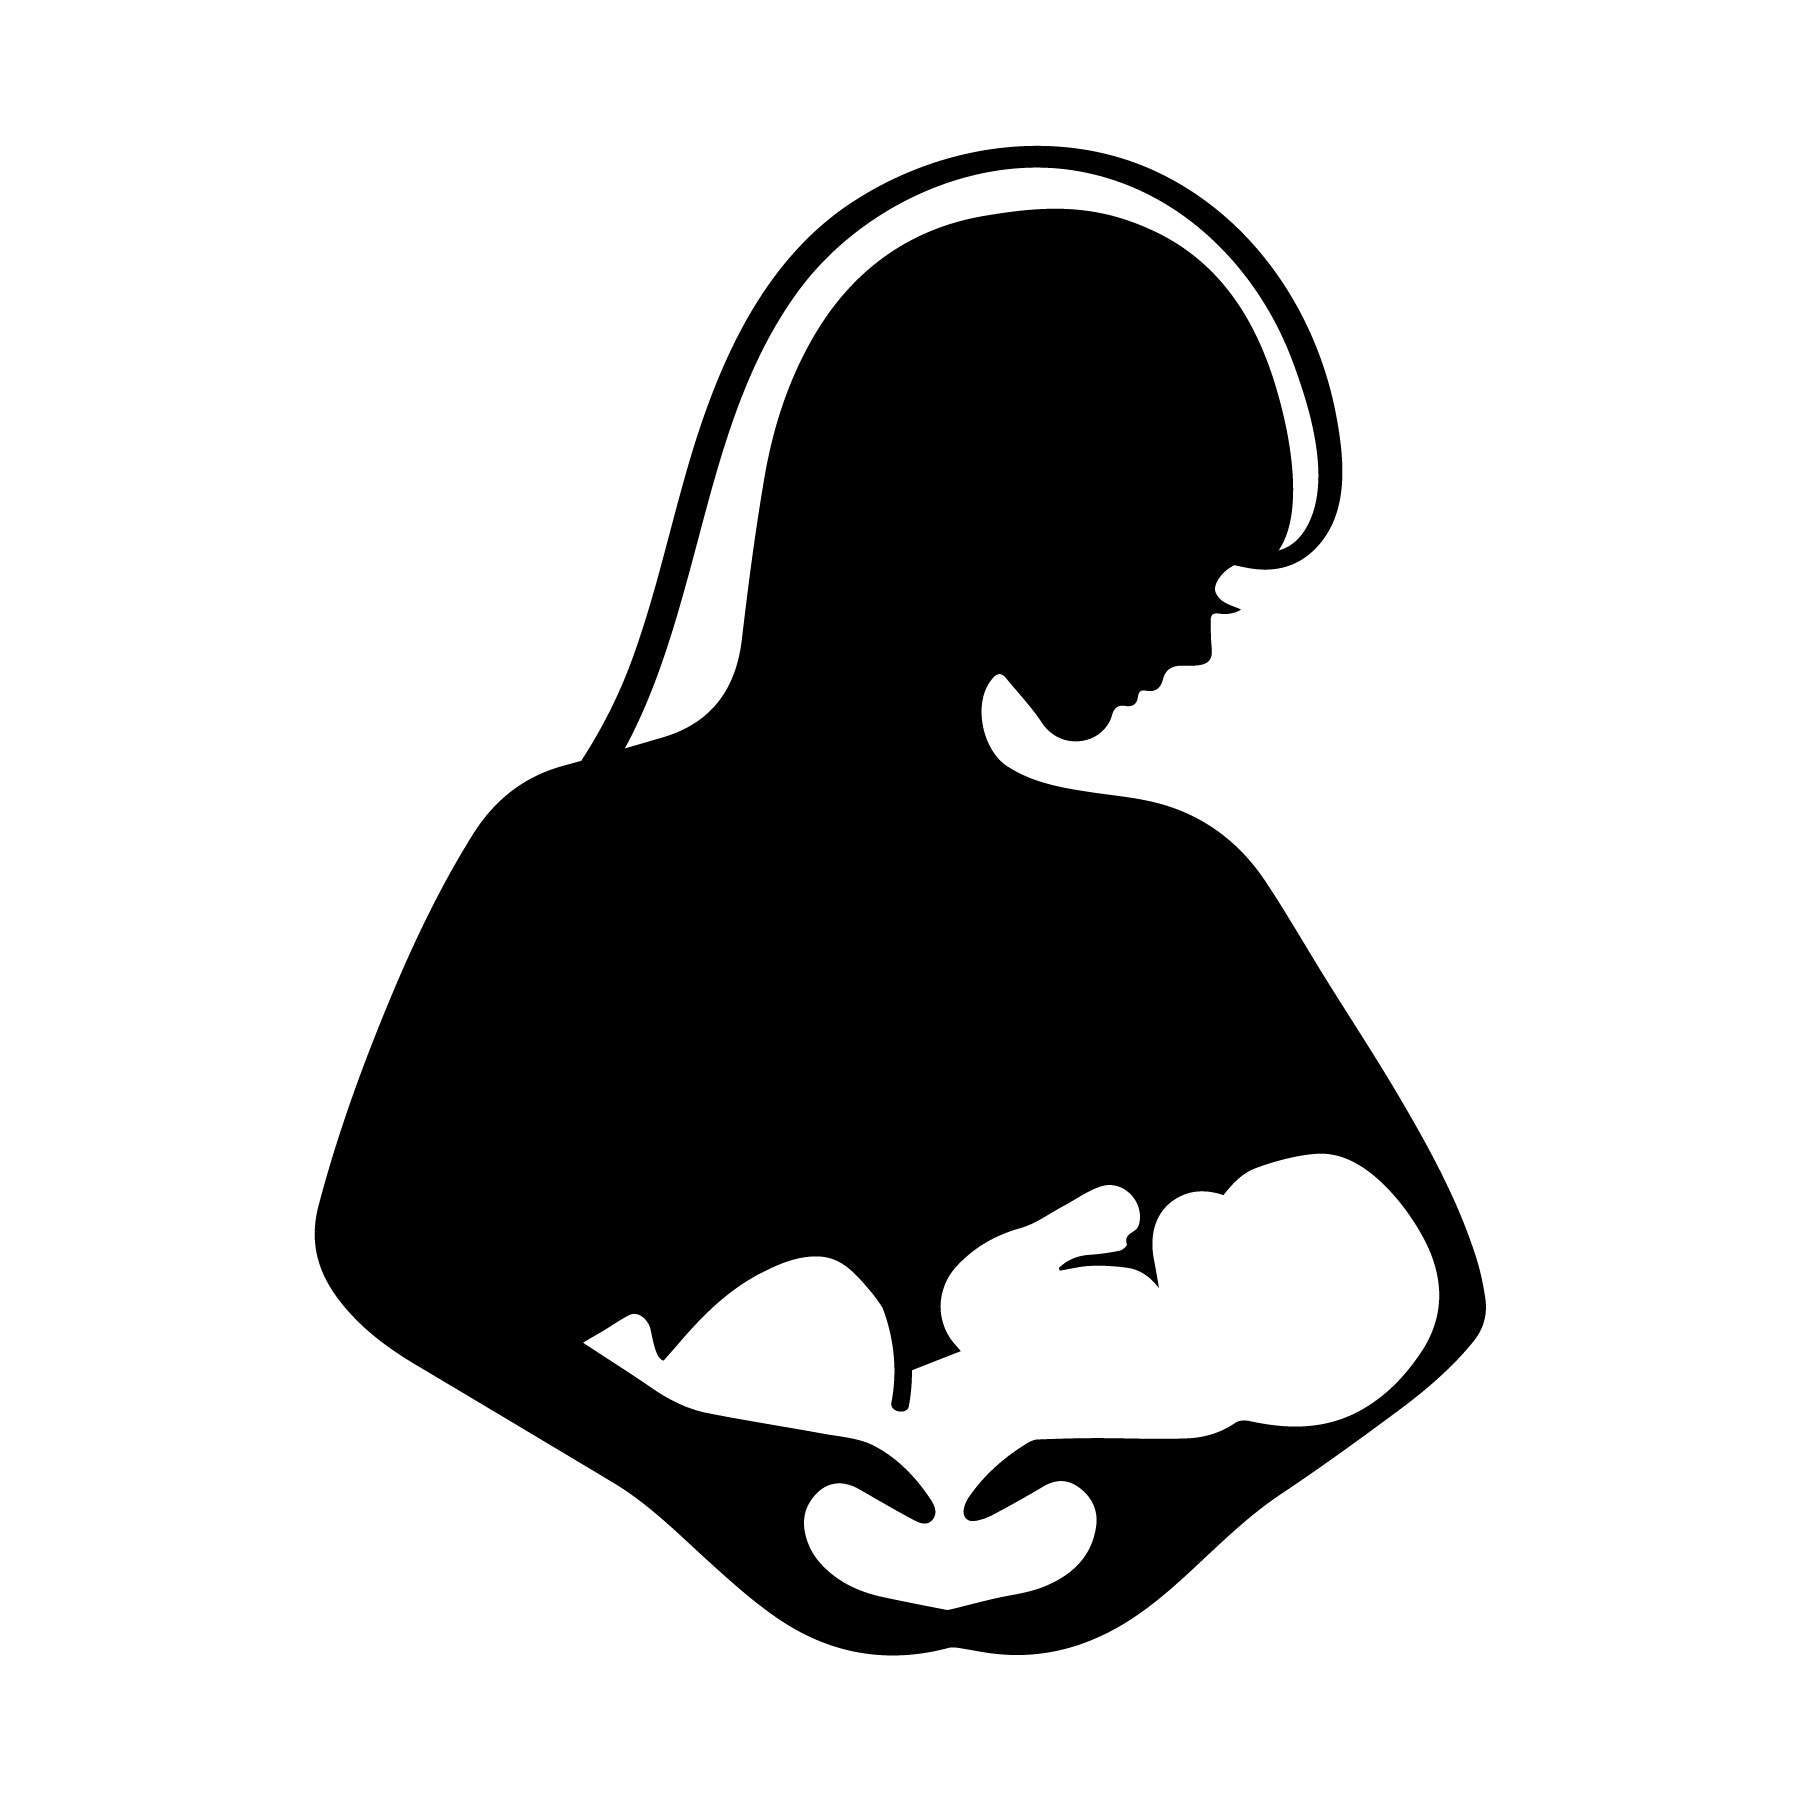 Breastfeeding Mother Vector Download Free Vectors Clipart Graphics And Vector Art